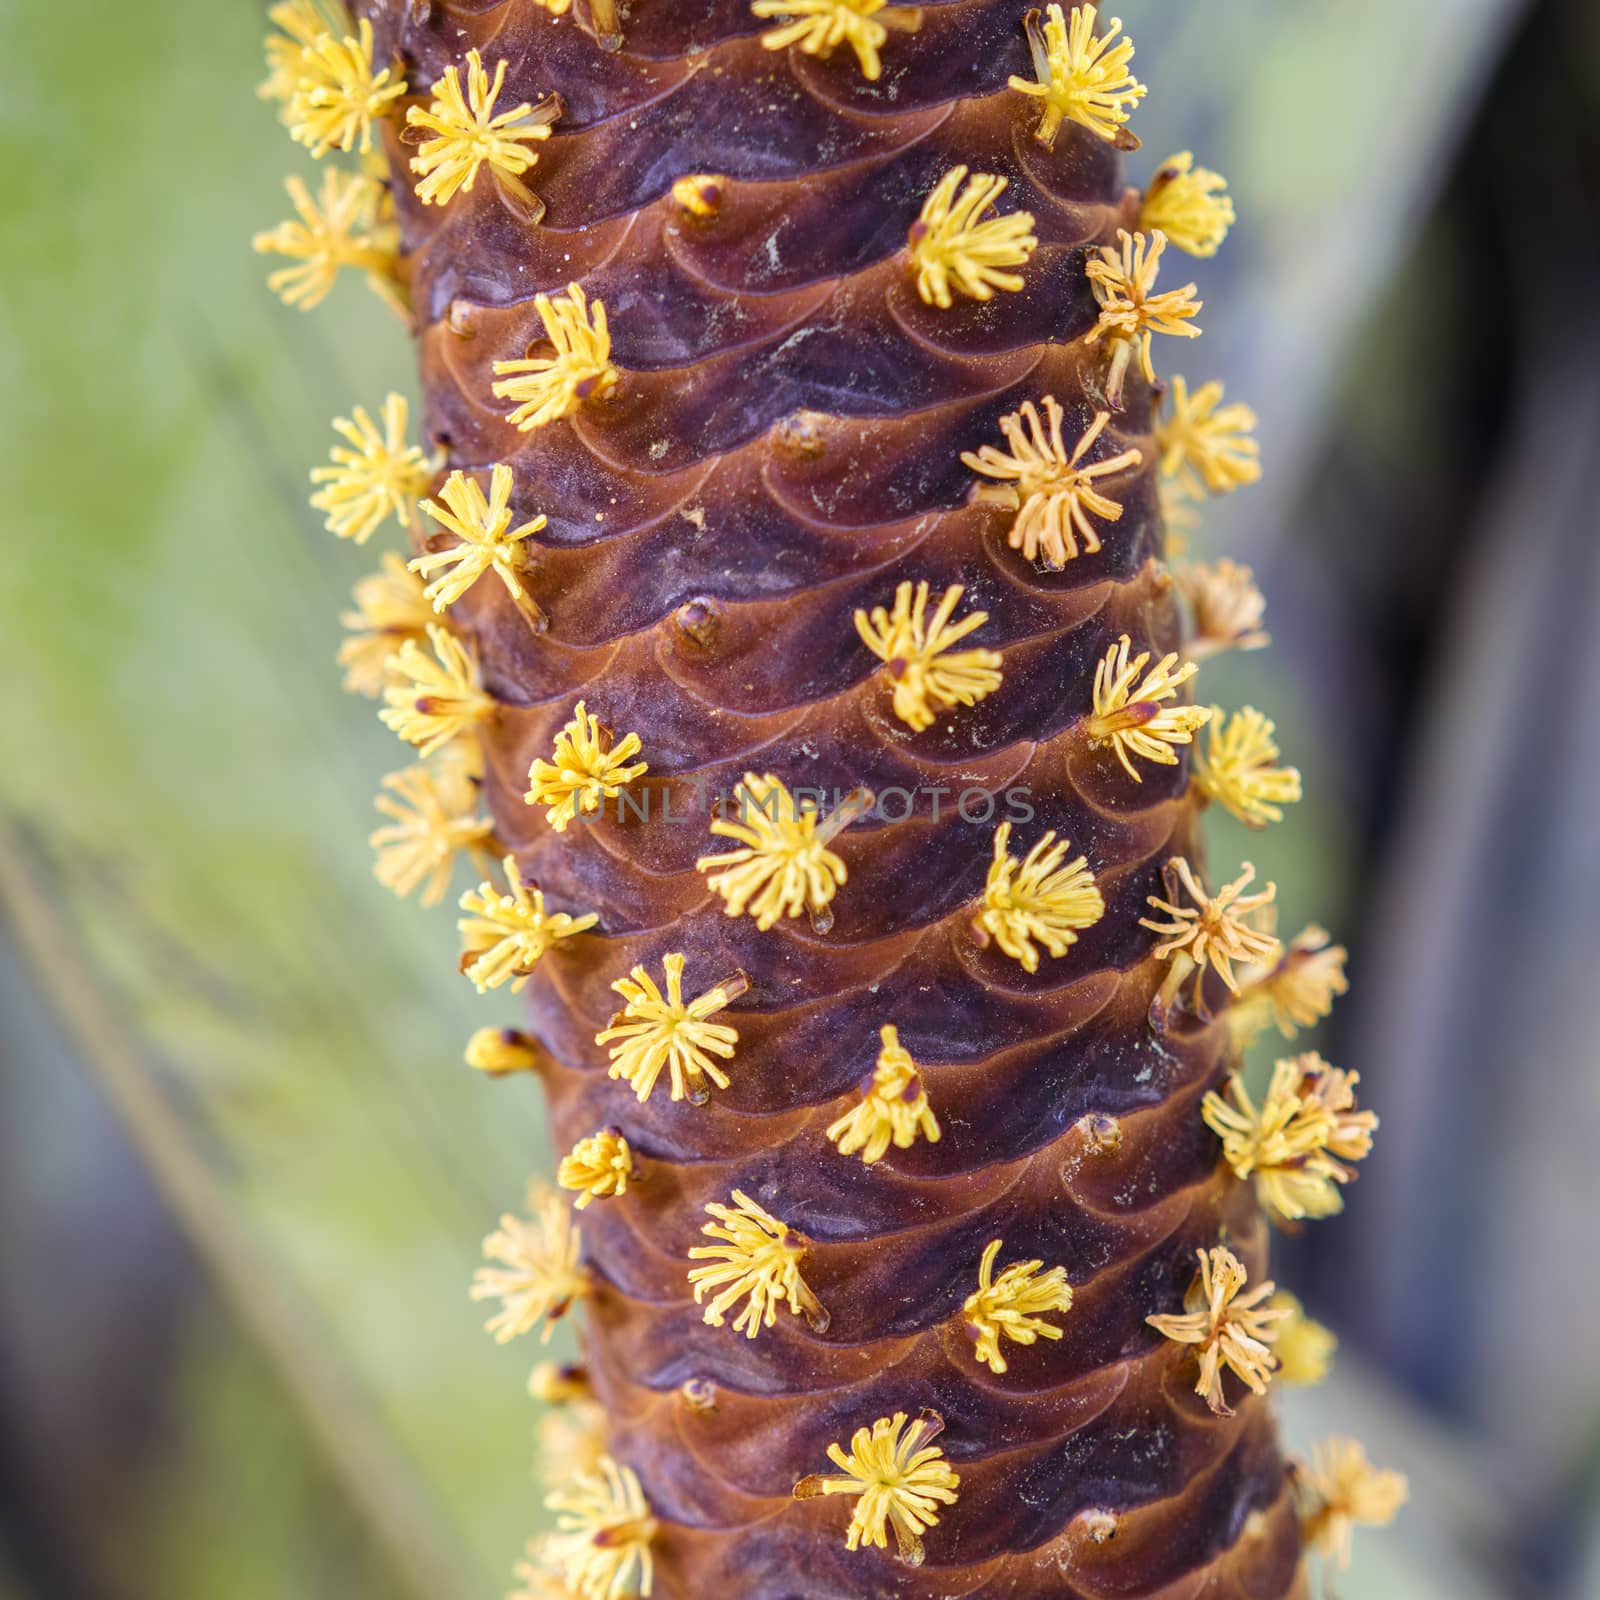 Male Flowers of Lodoicea maldivica. Sea Coconut also known as Coco de Mer or Double Coconut